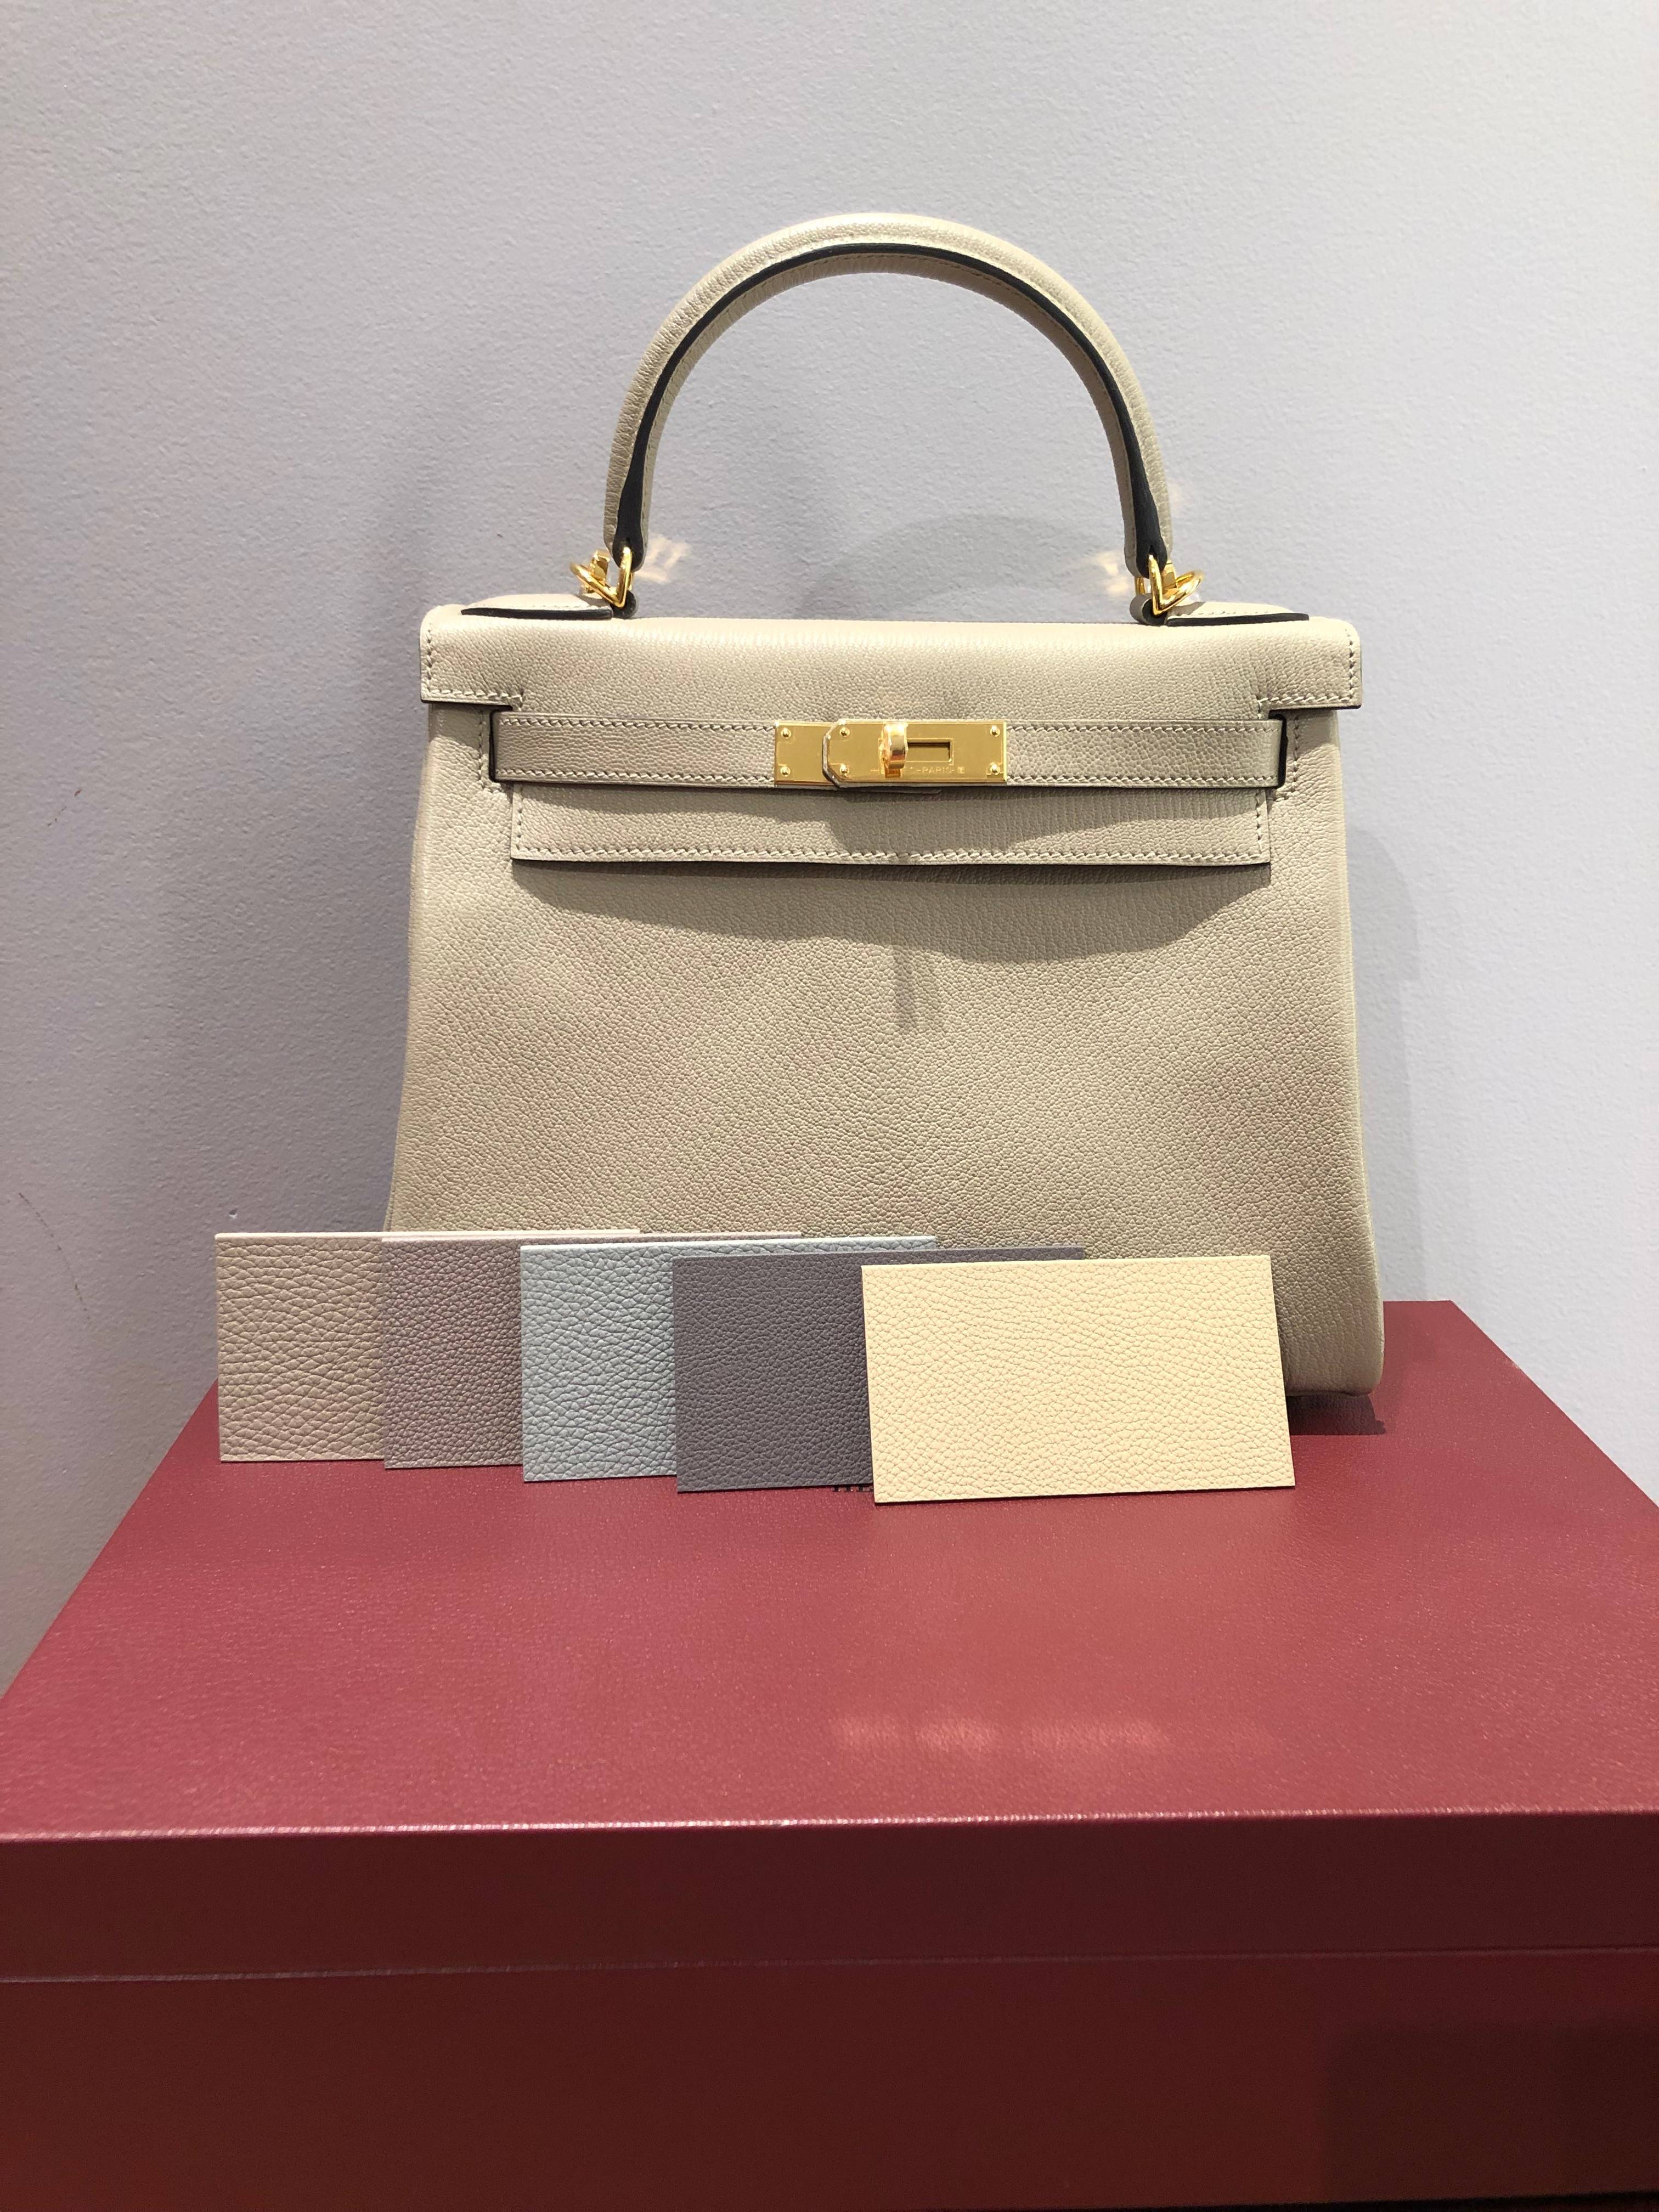 Evolution of the Hermès Mini Kelly Bag